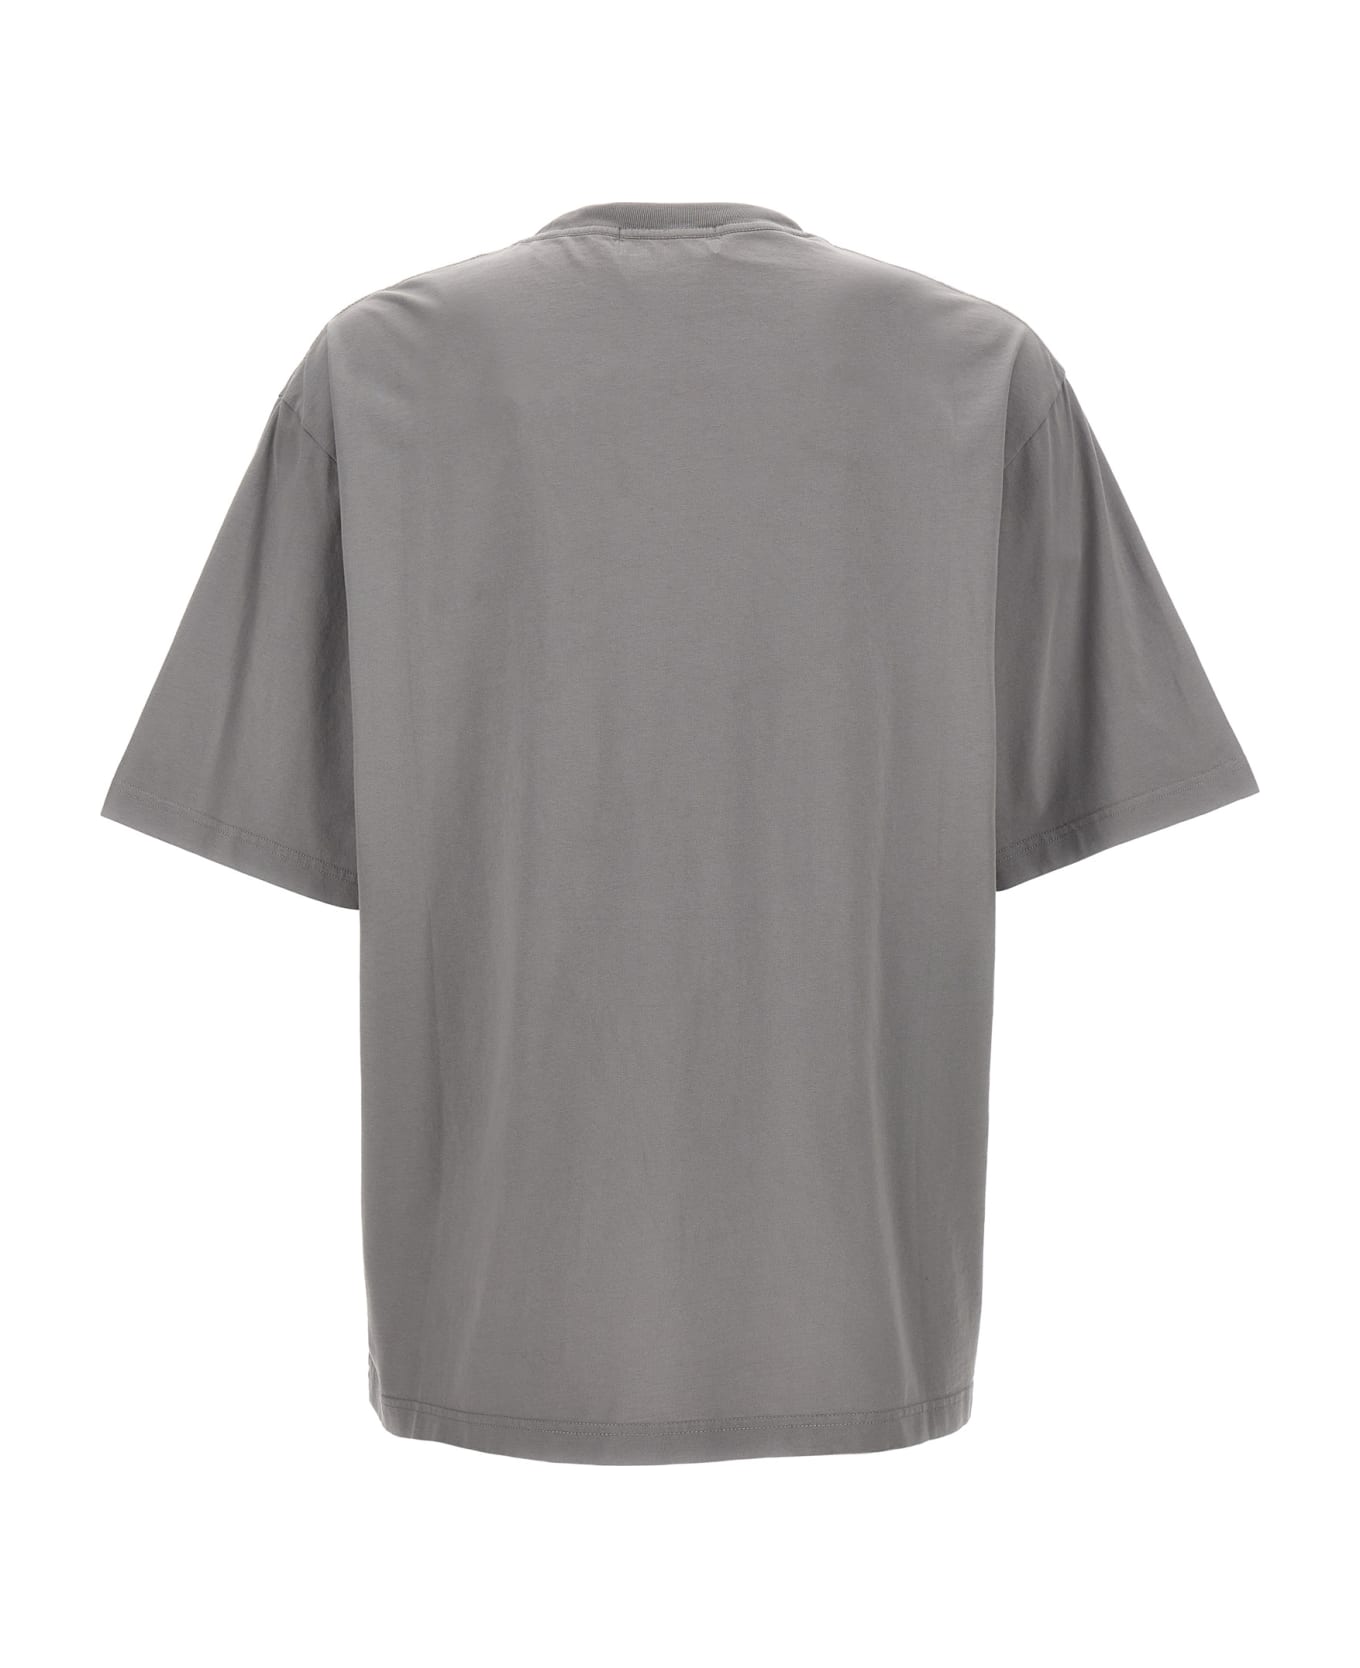 AMBUSH 'new Multicord' T-shirt - Gray